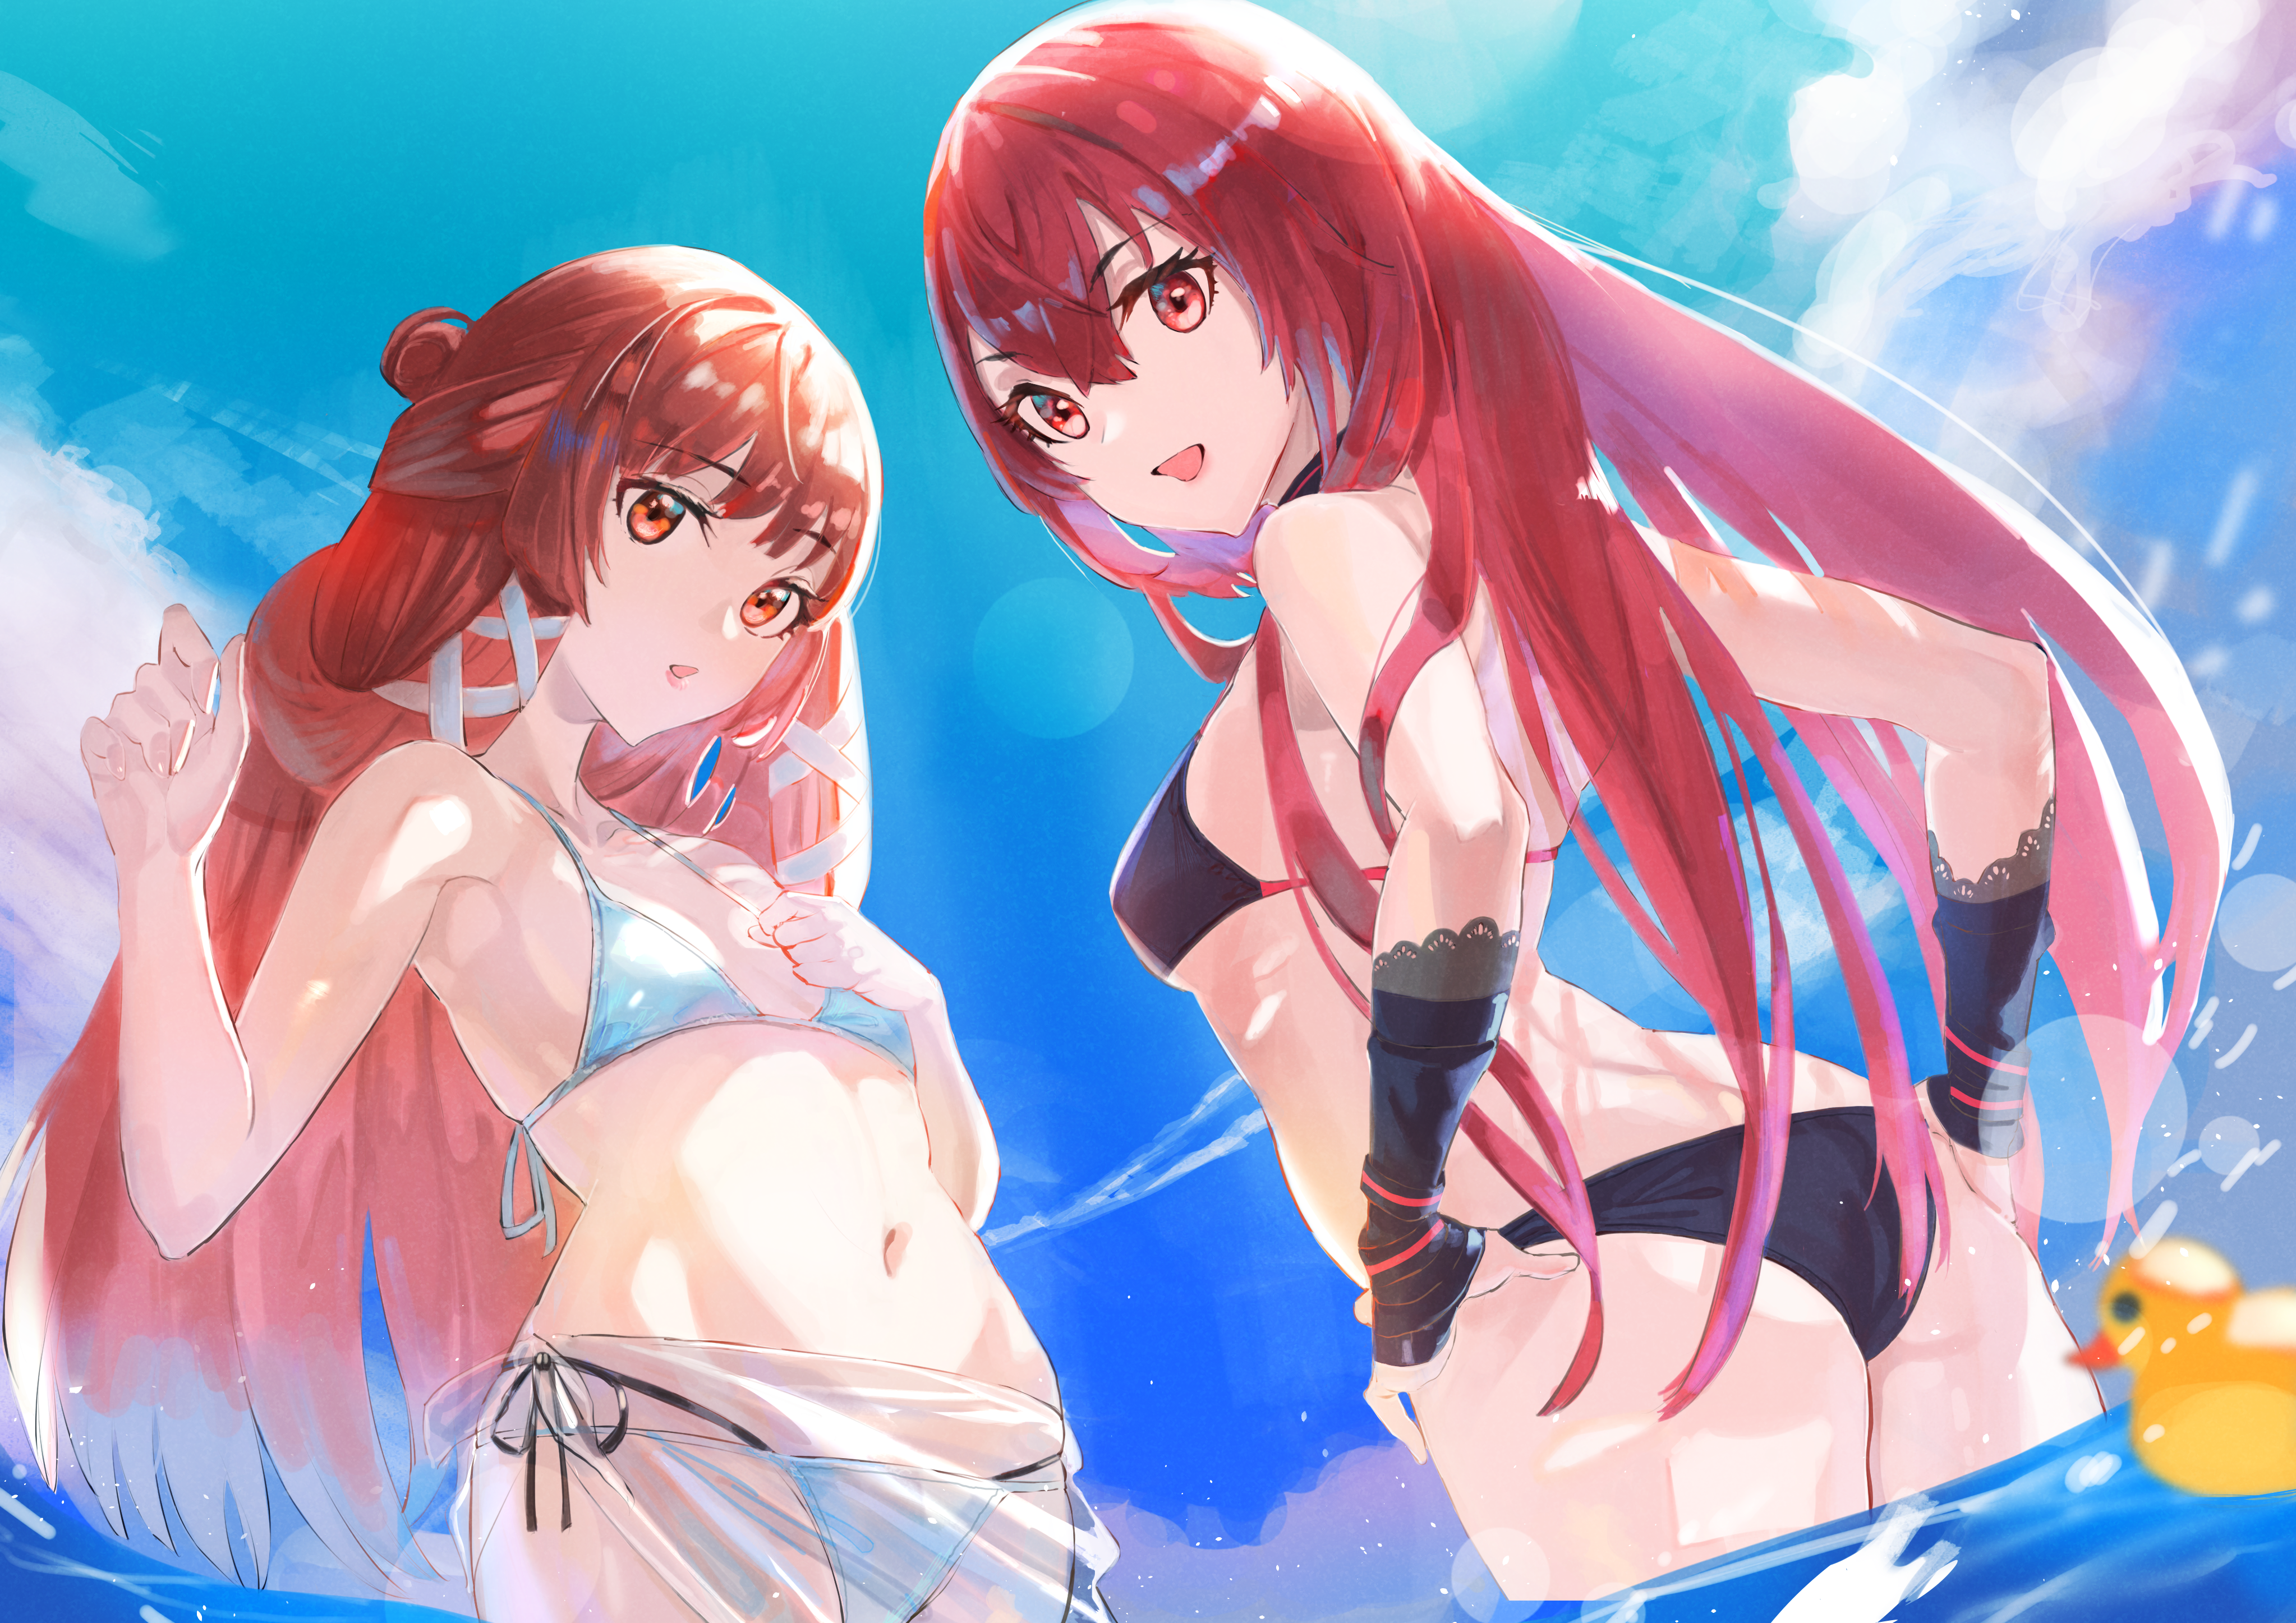 Anime 4093x2894 anime anime girls you-6-11 bikini water ass small boobs redhead long hair standing in water